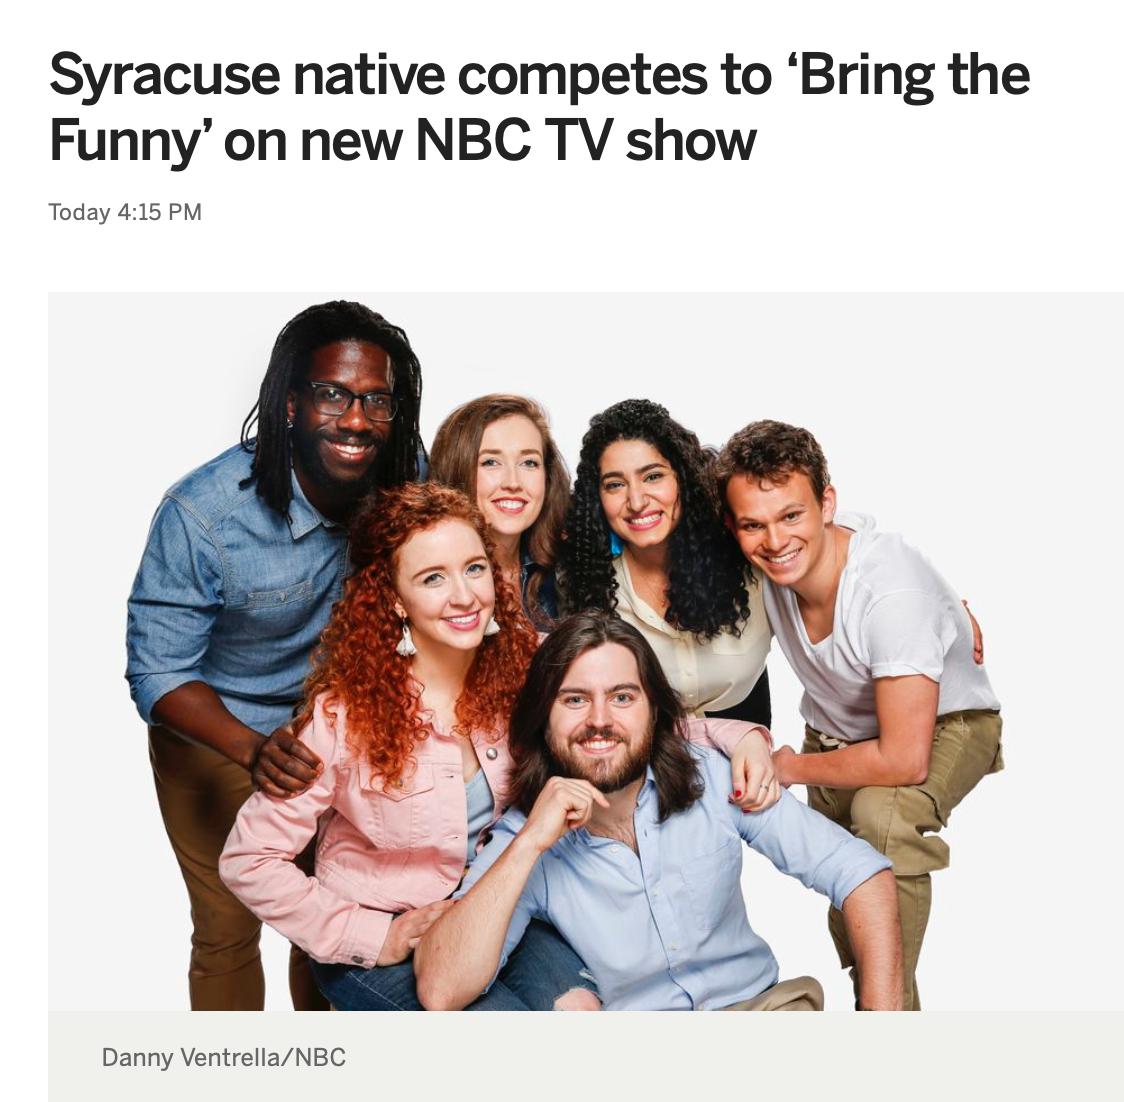 Syracuse.com/Post Standard